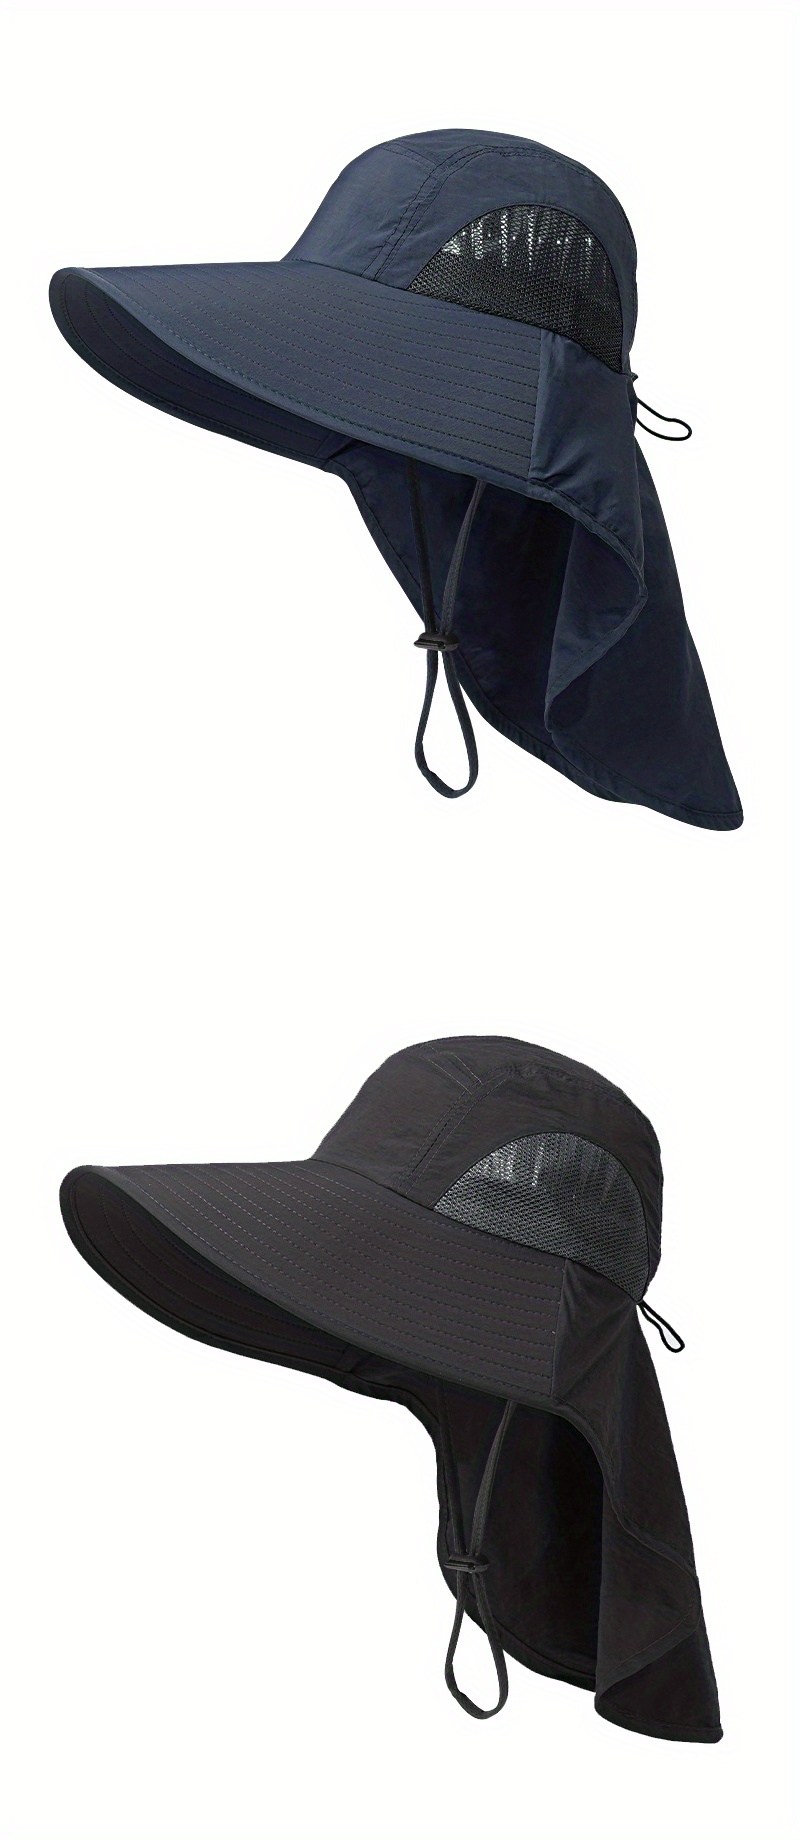 Buy Ubersweet® Sun Protection Cap for Men, Beach Fishing Hat, Summer Hat  for Men, Round Sun Cap for Hiking, Fishing, Gardning, Travel at